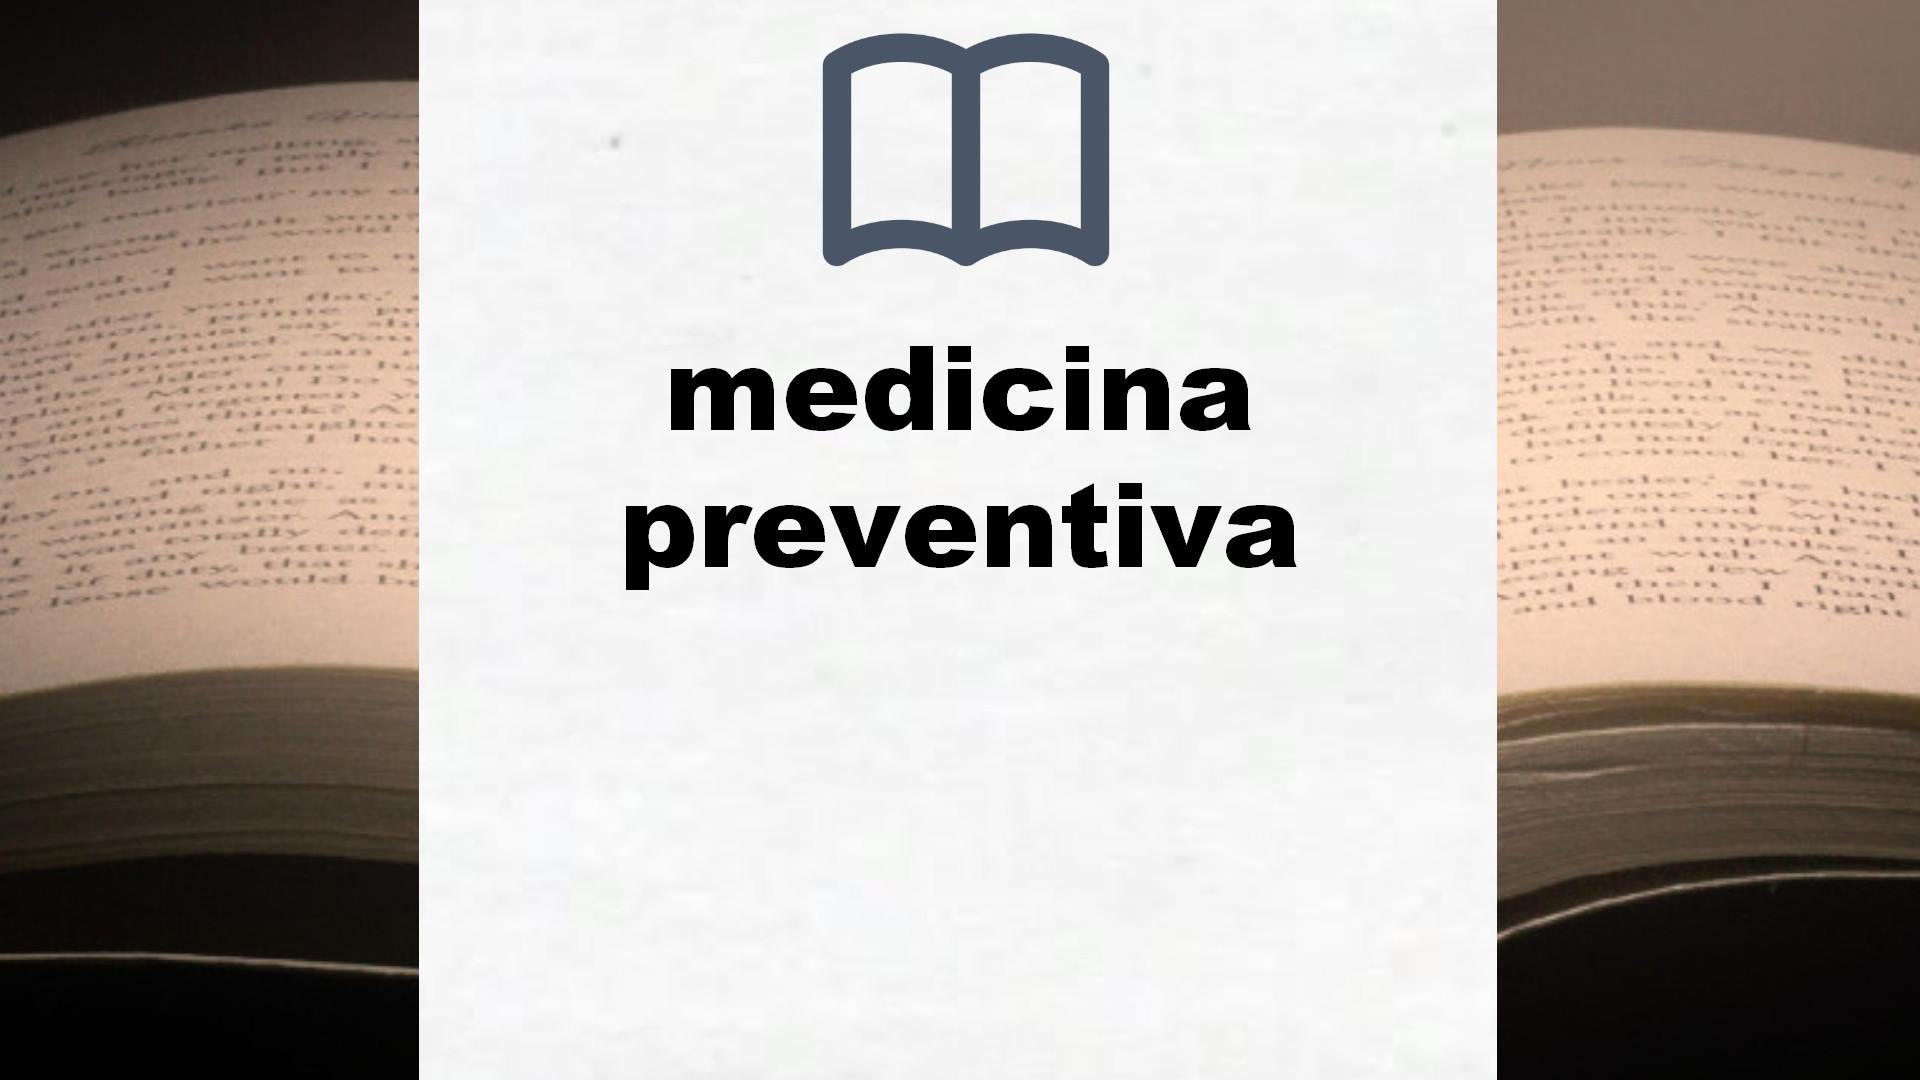 Libros sobre medicina preventiva